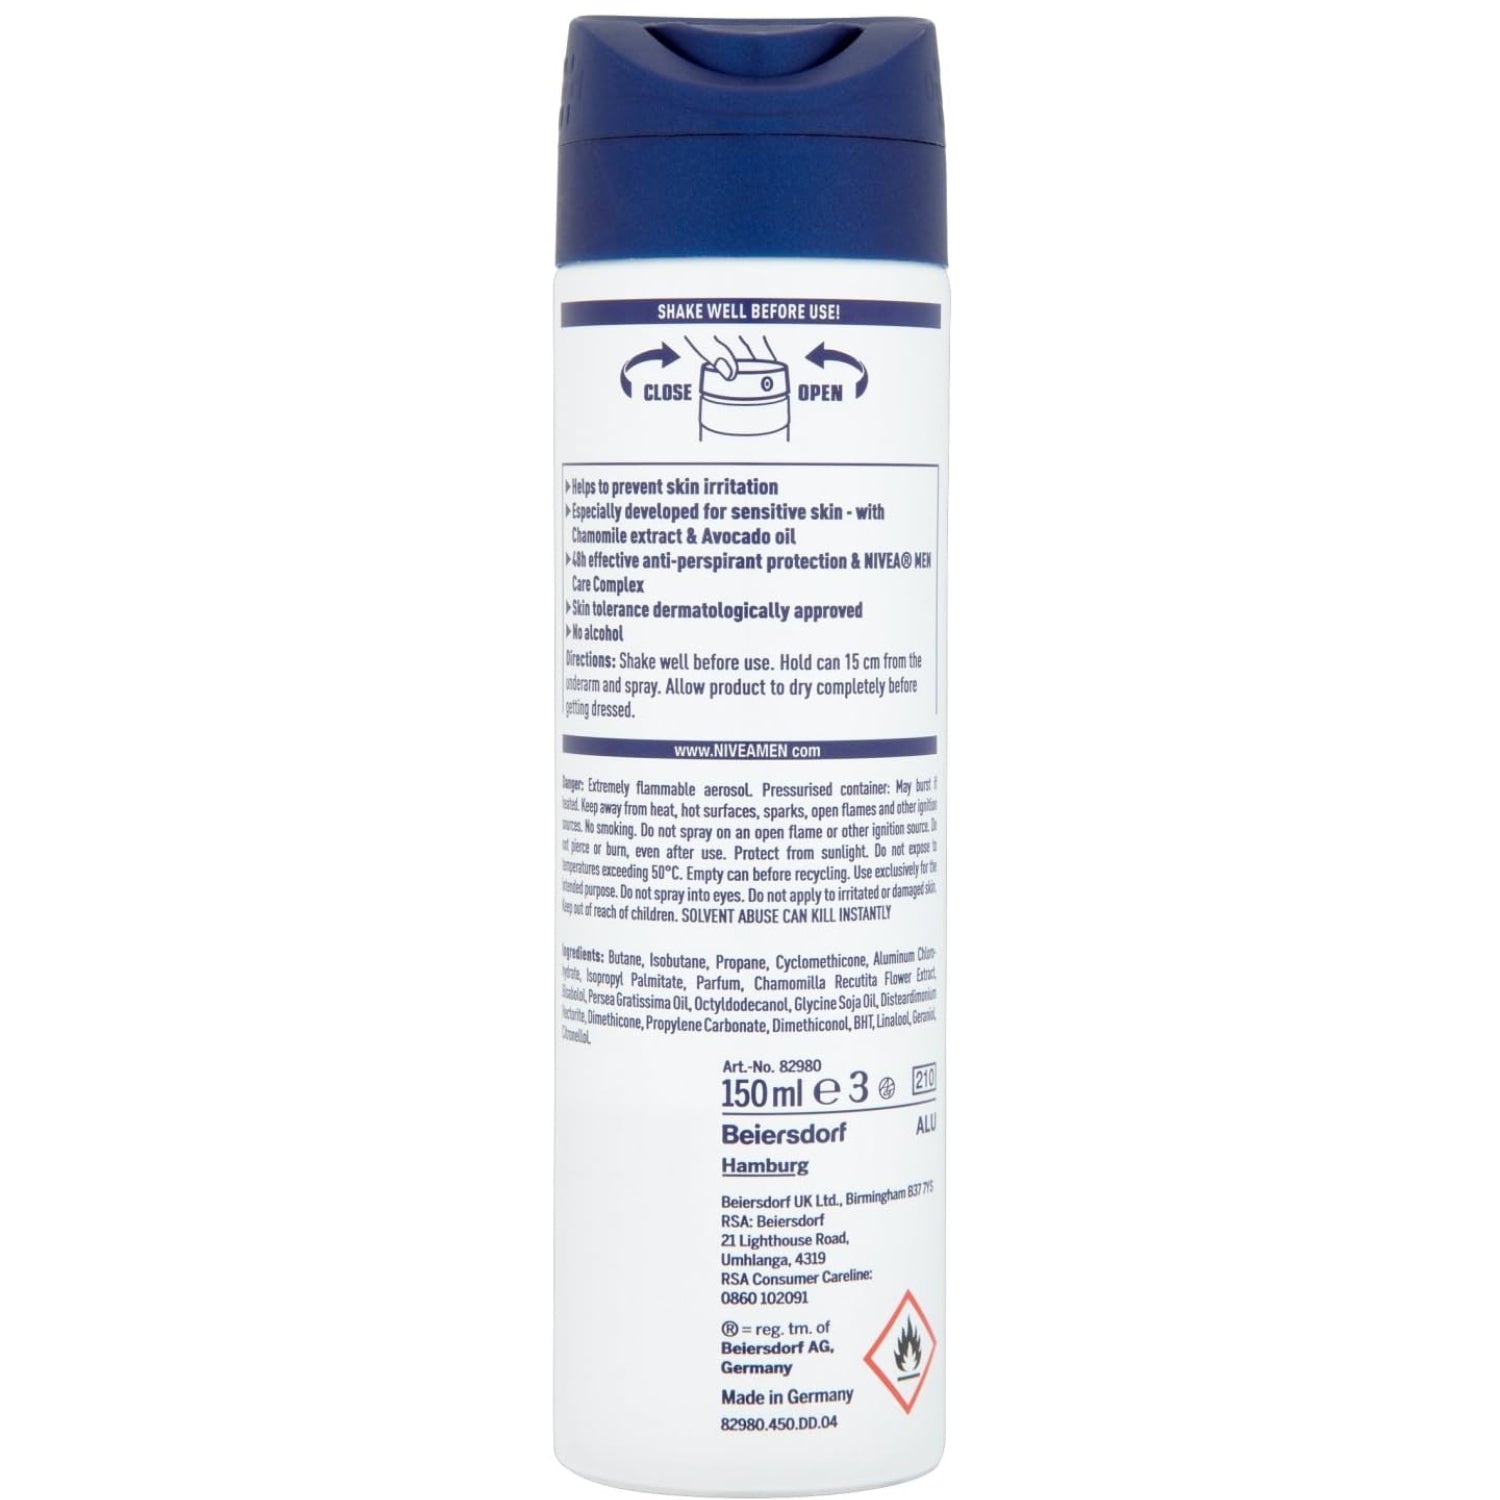 NIVEA MEN Anti-Perspirant Deodorant Spray Sensitive Protect (150ml)